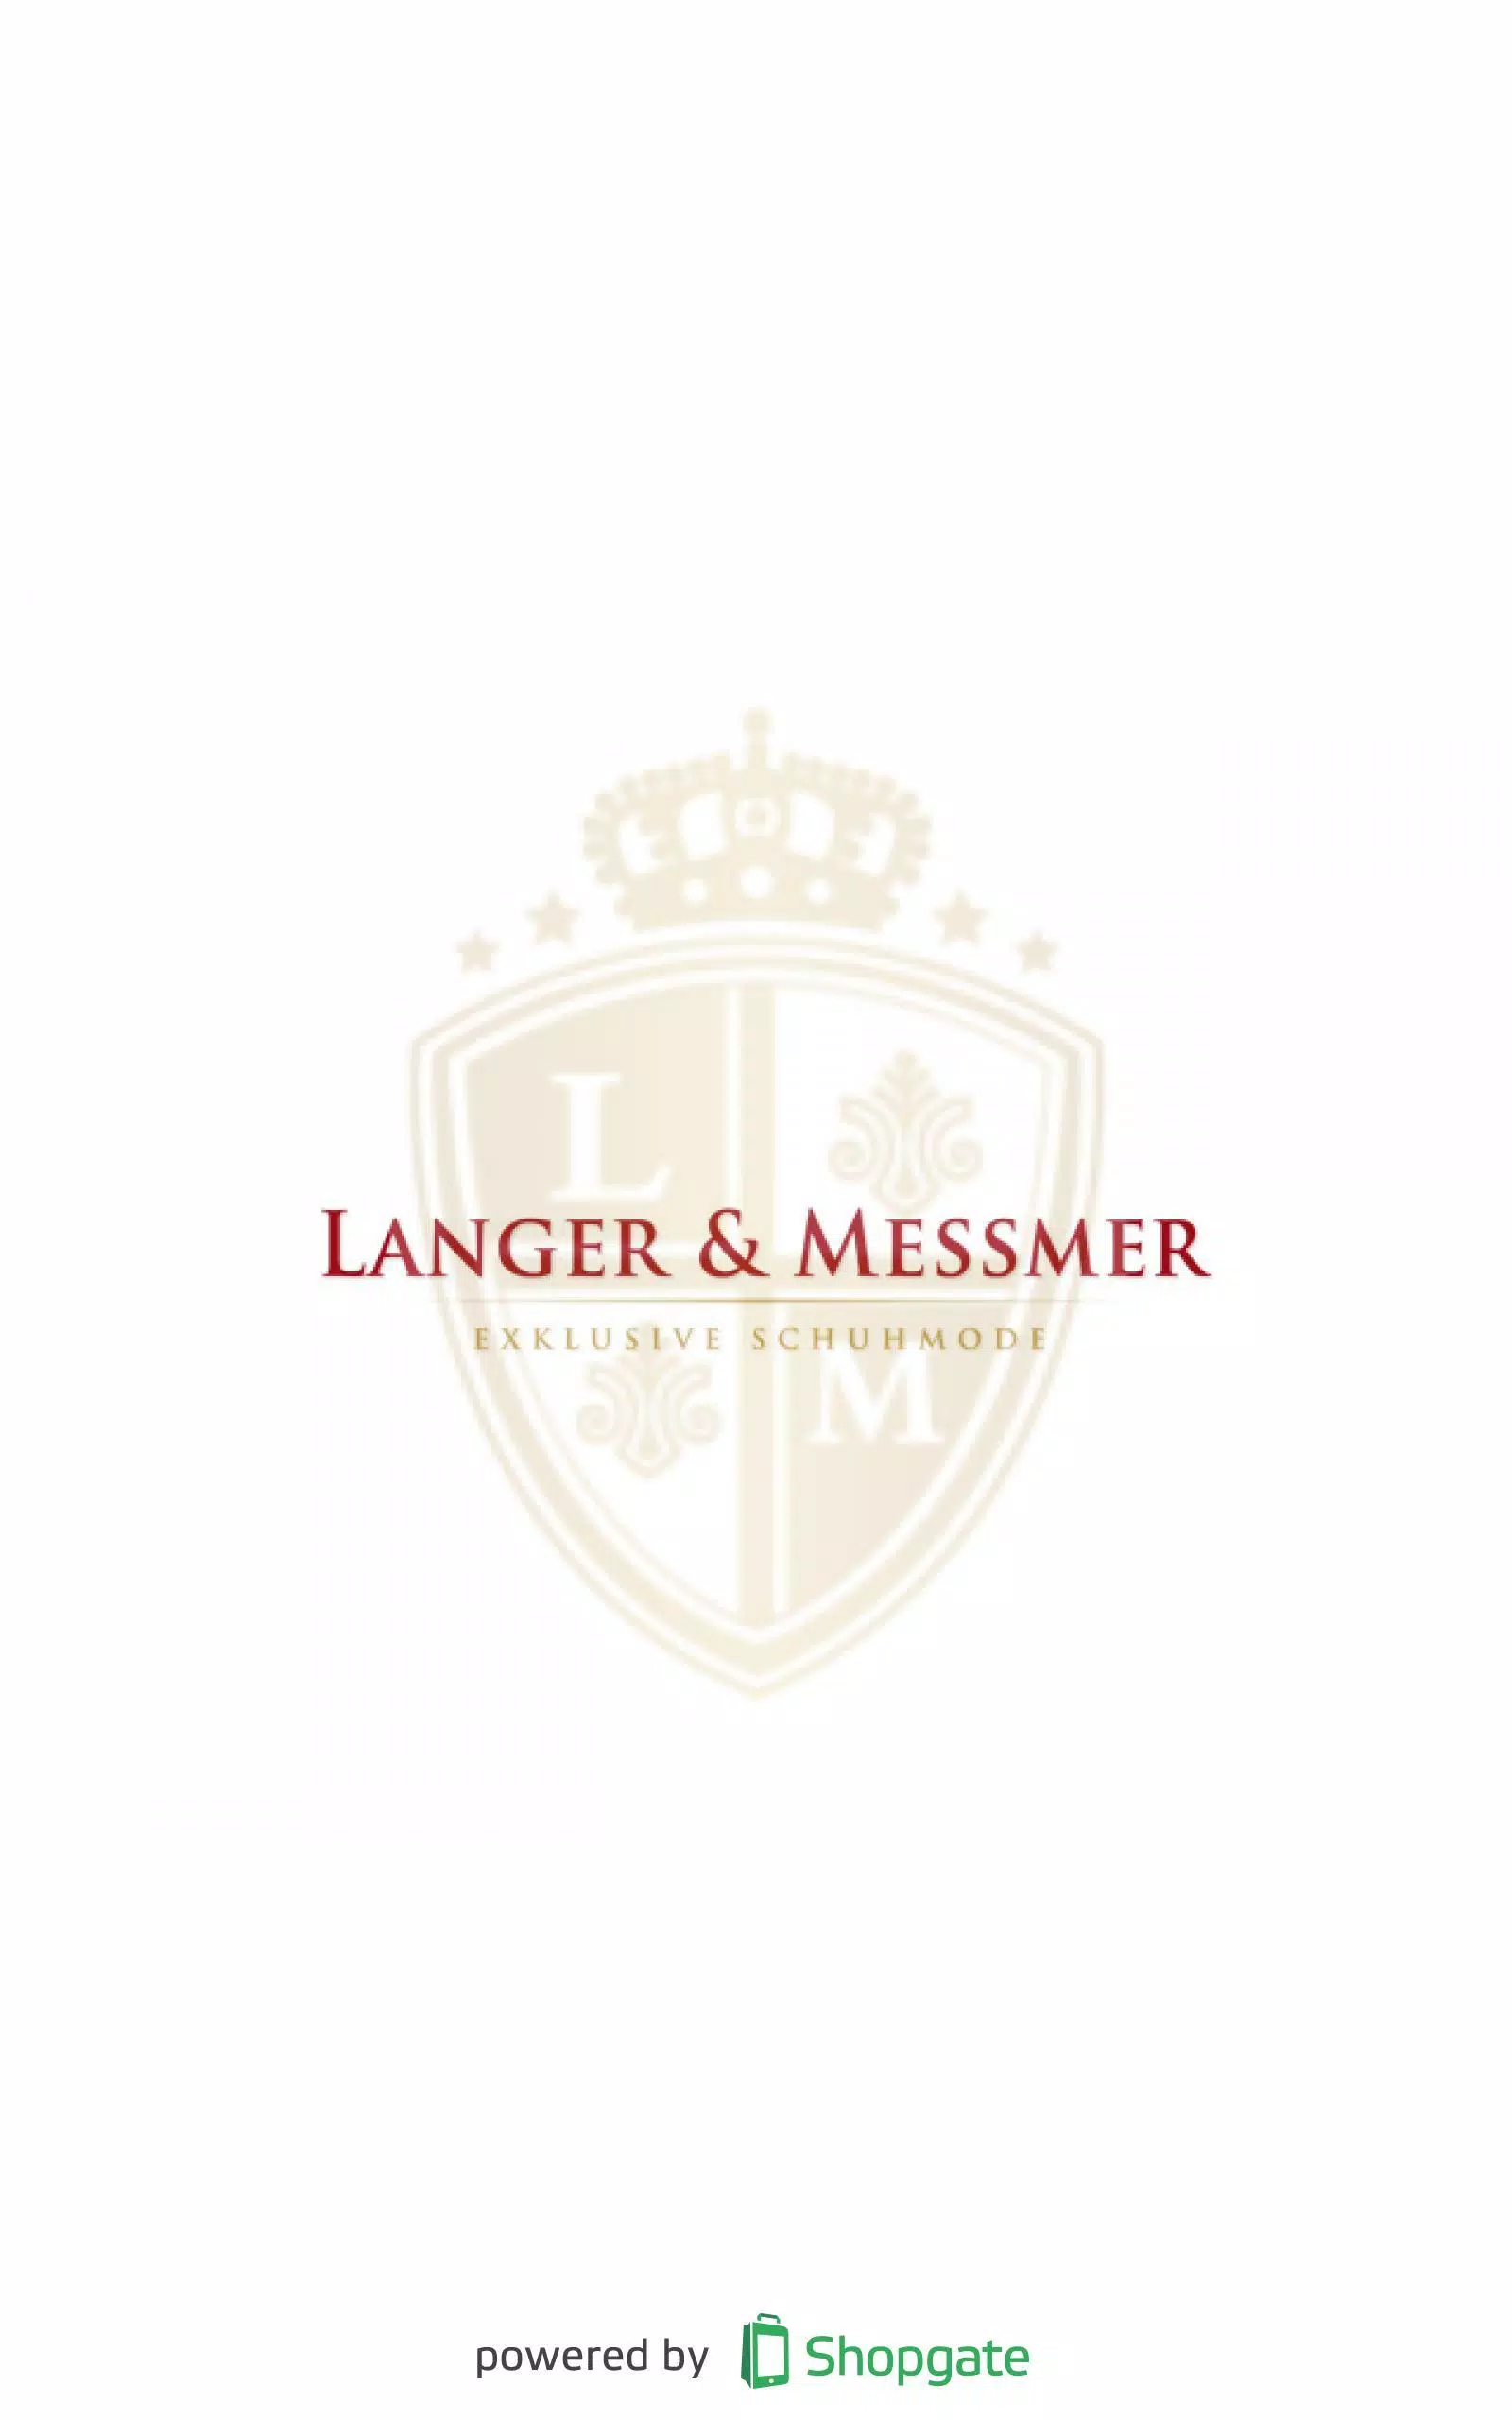 Langer & Messmer GmbH for Android - APK Download